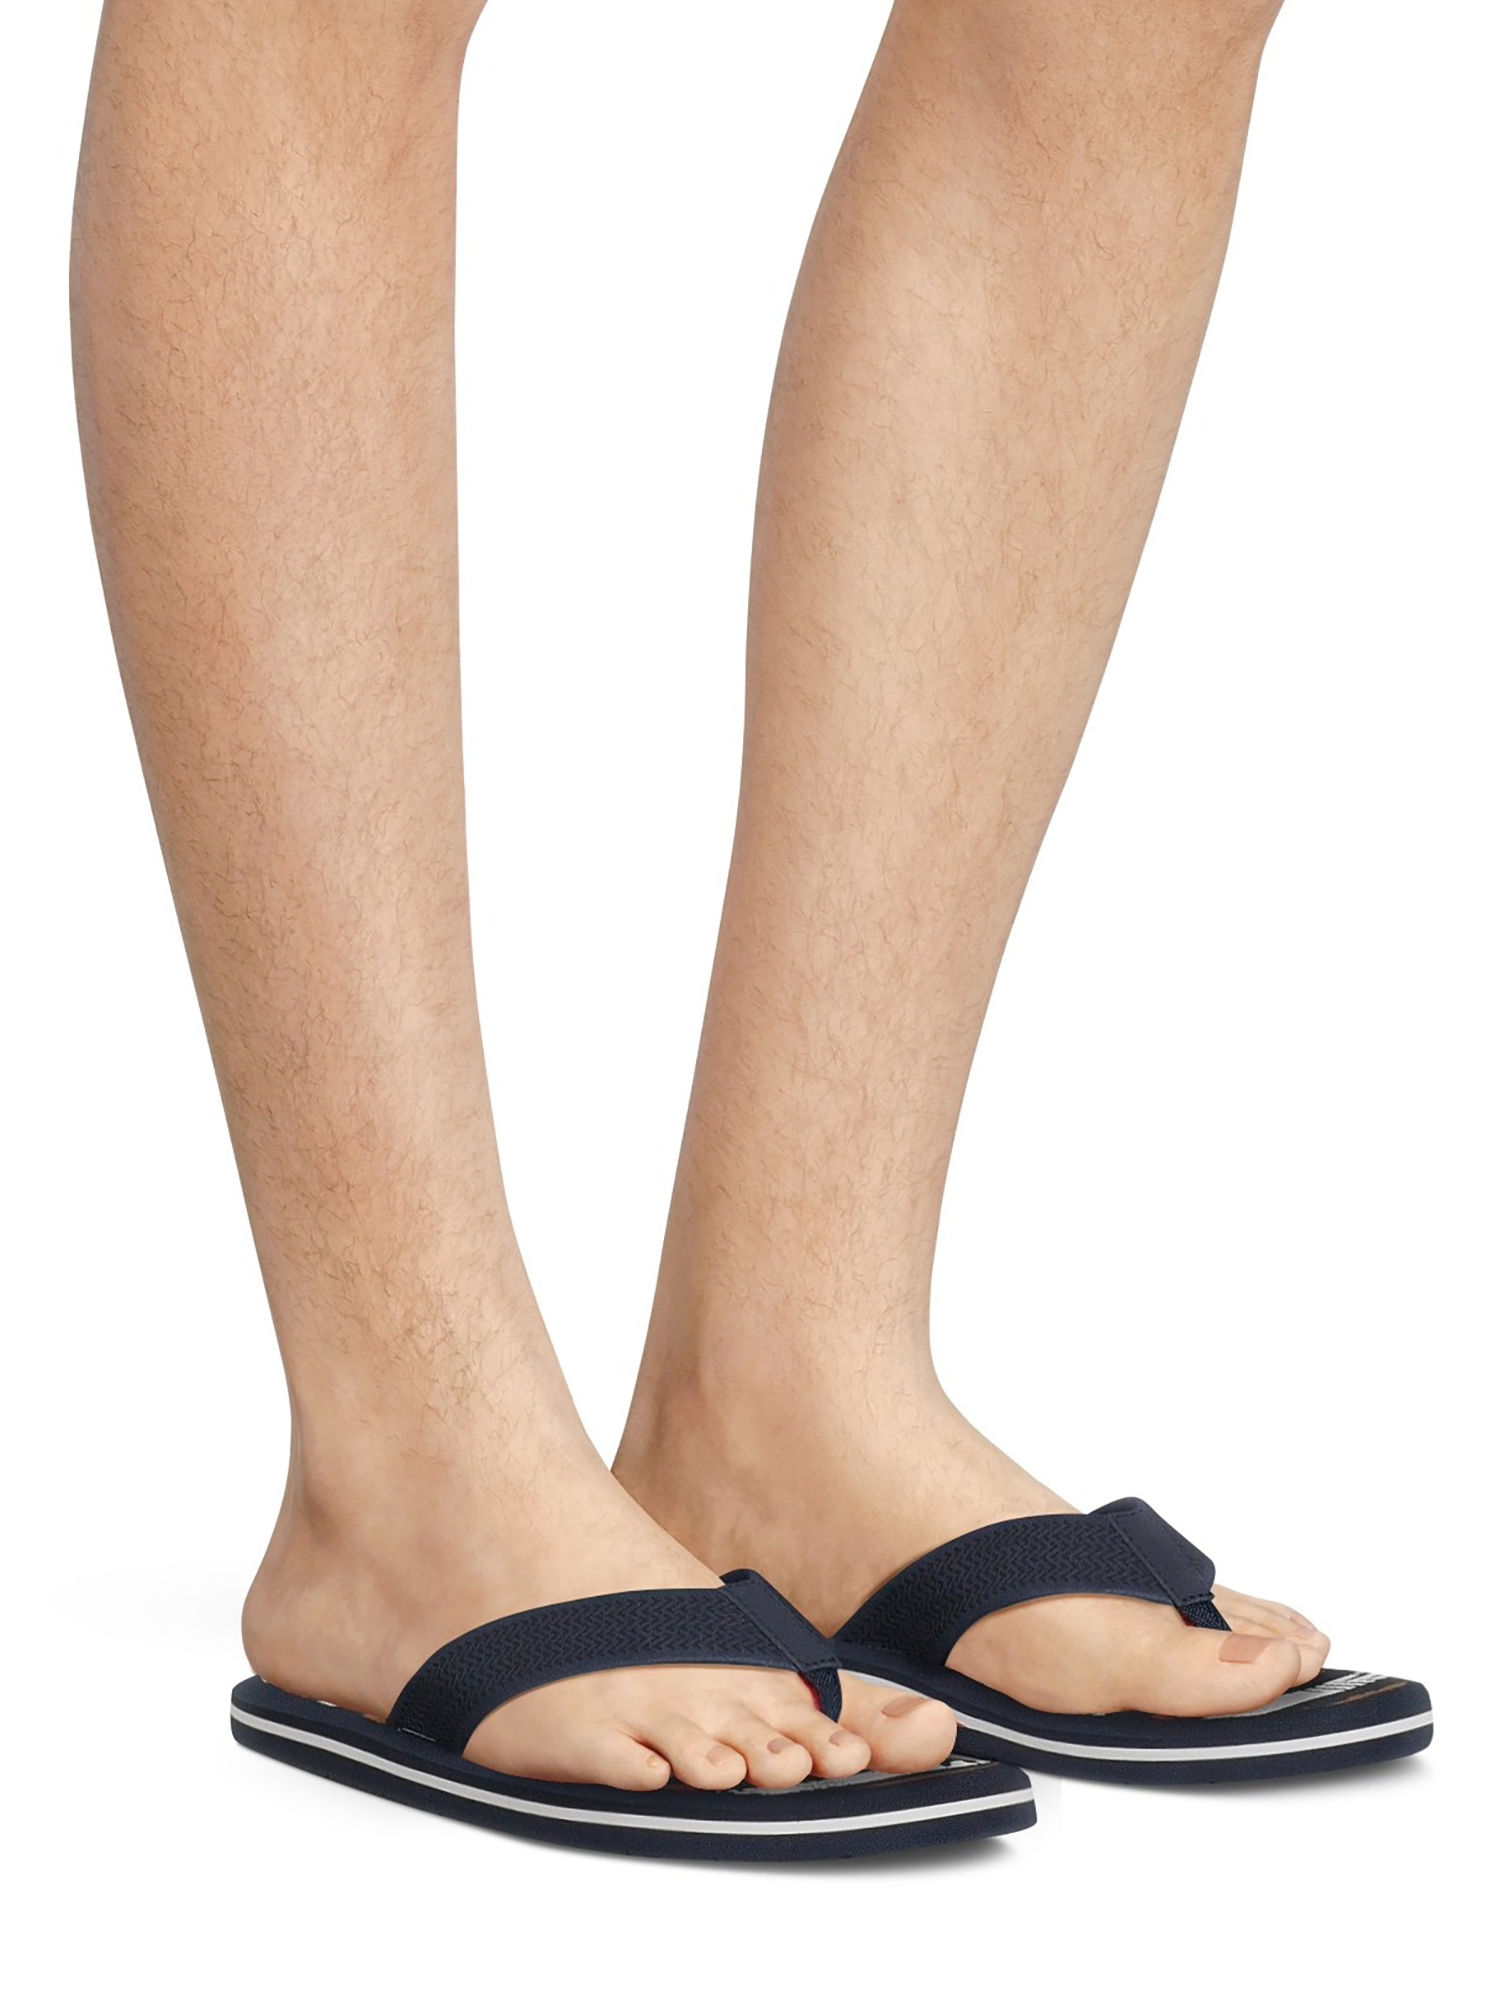 George Men's Ocean Flip Sandals - image 3 of 7